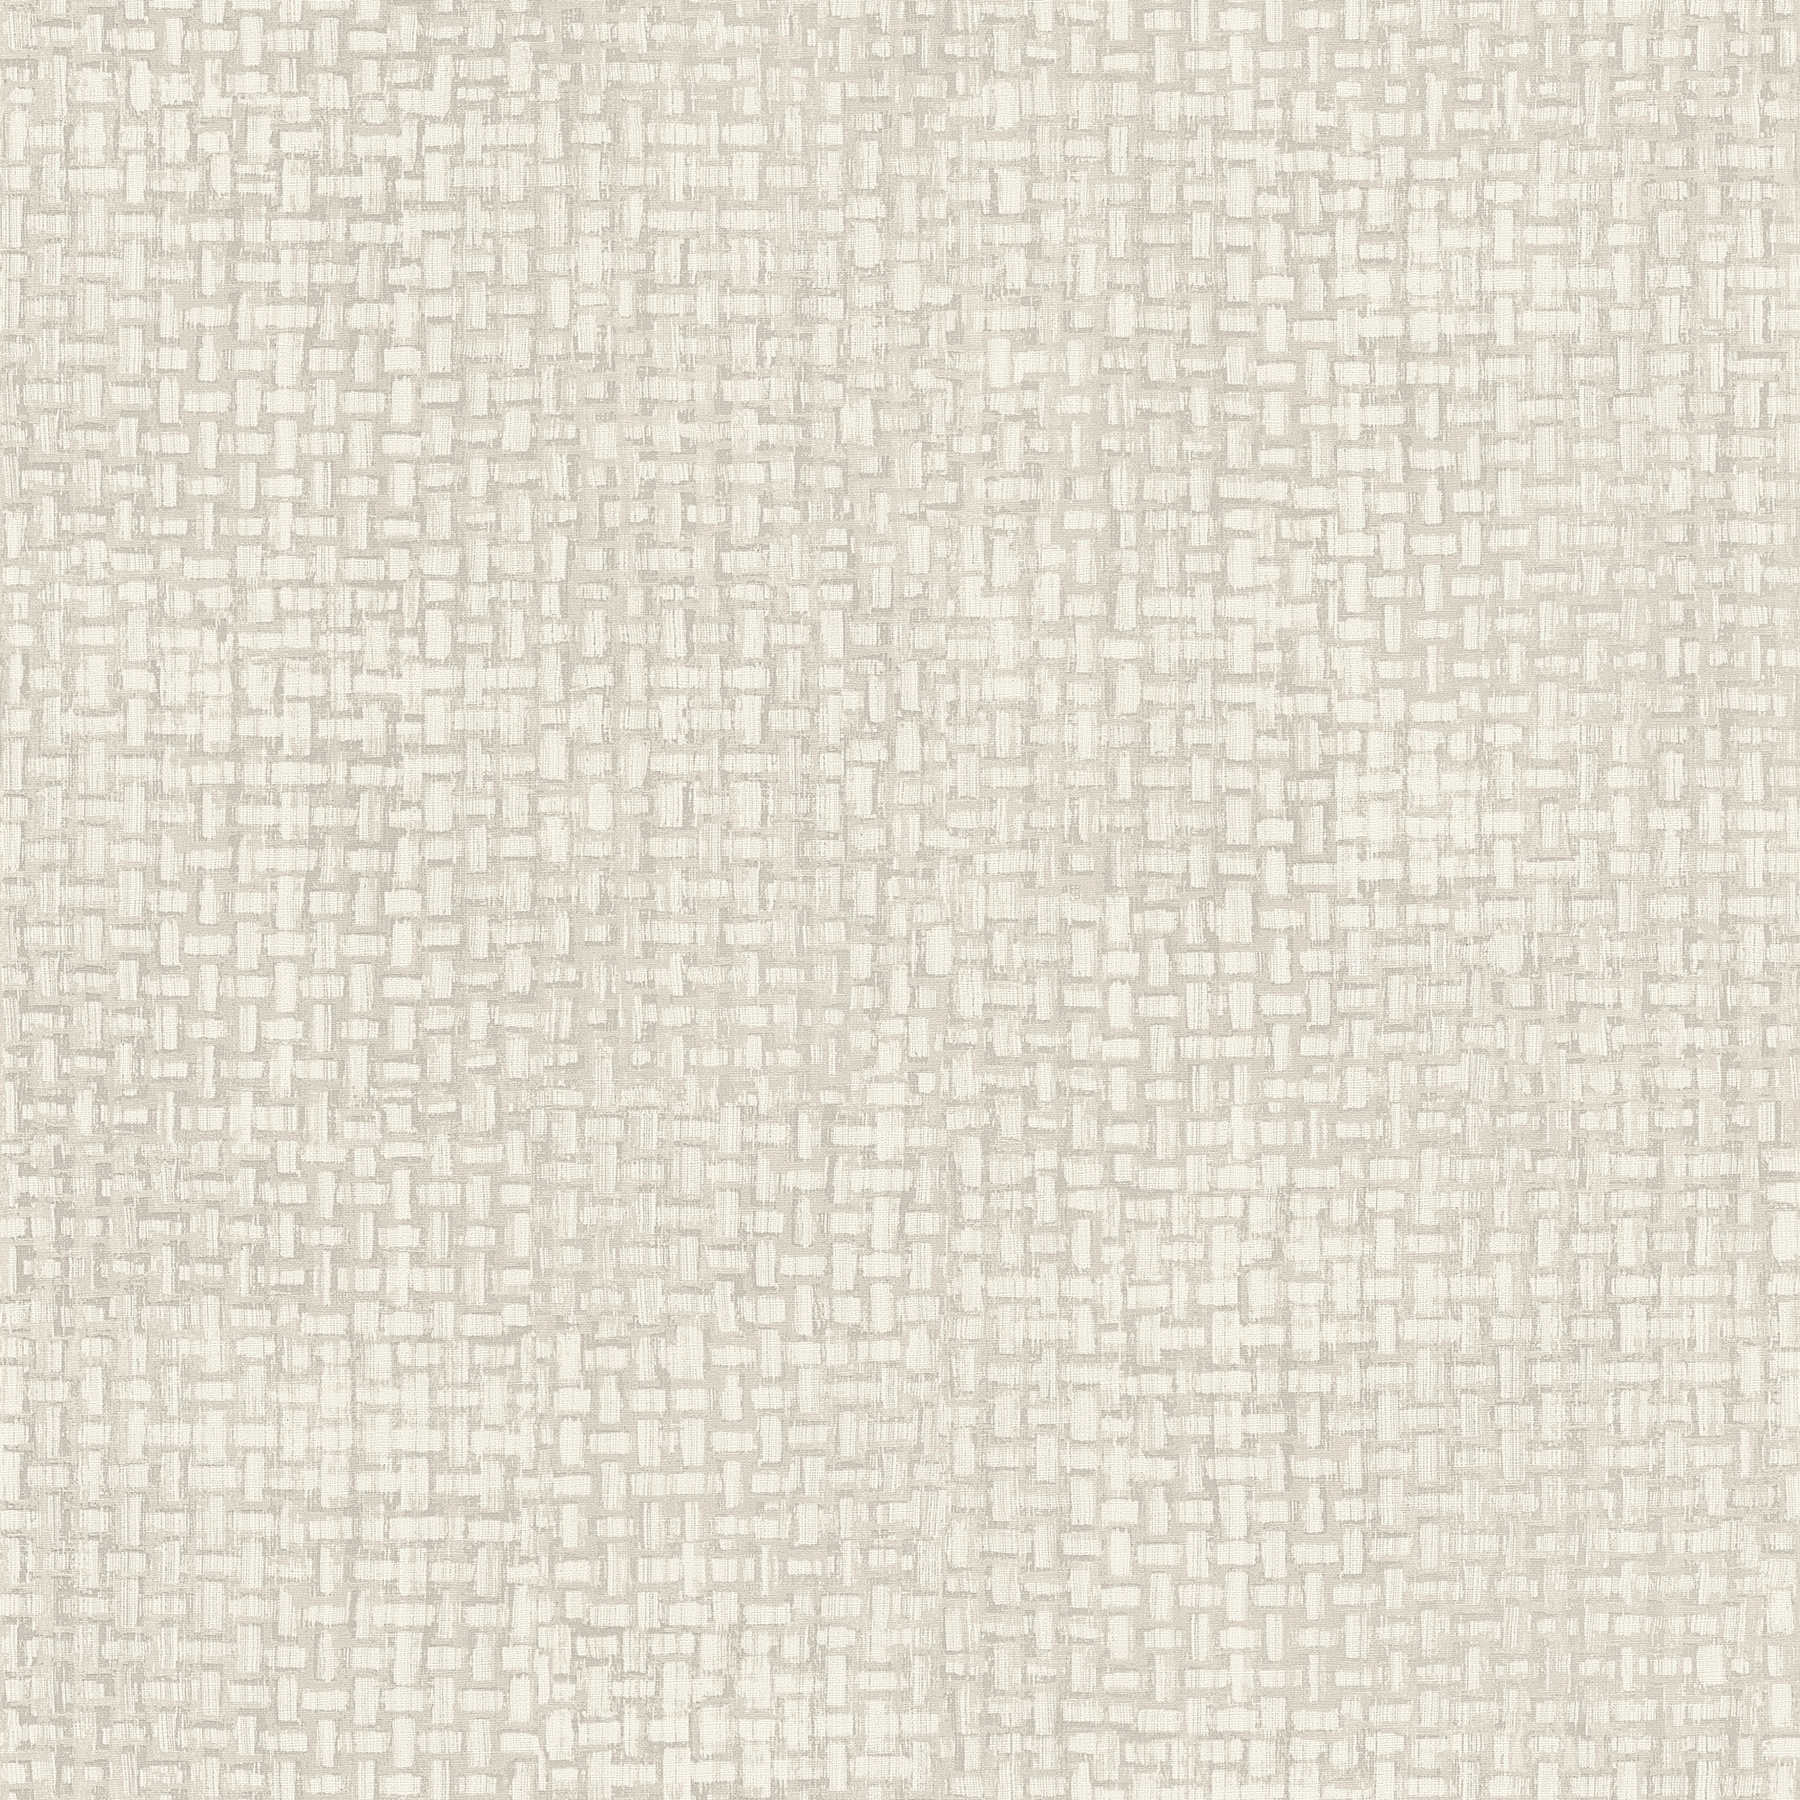         Tapete Textil-Look mit Flechtstruktur – Beige, Grau
    